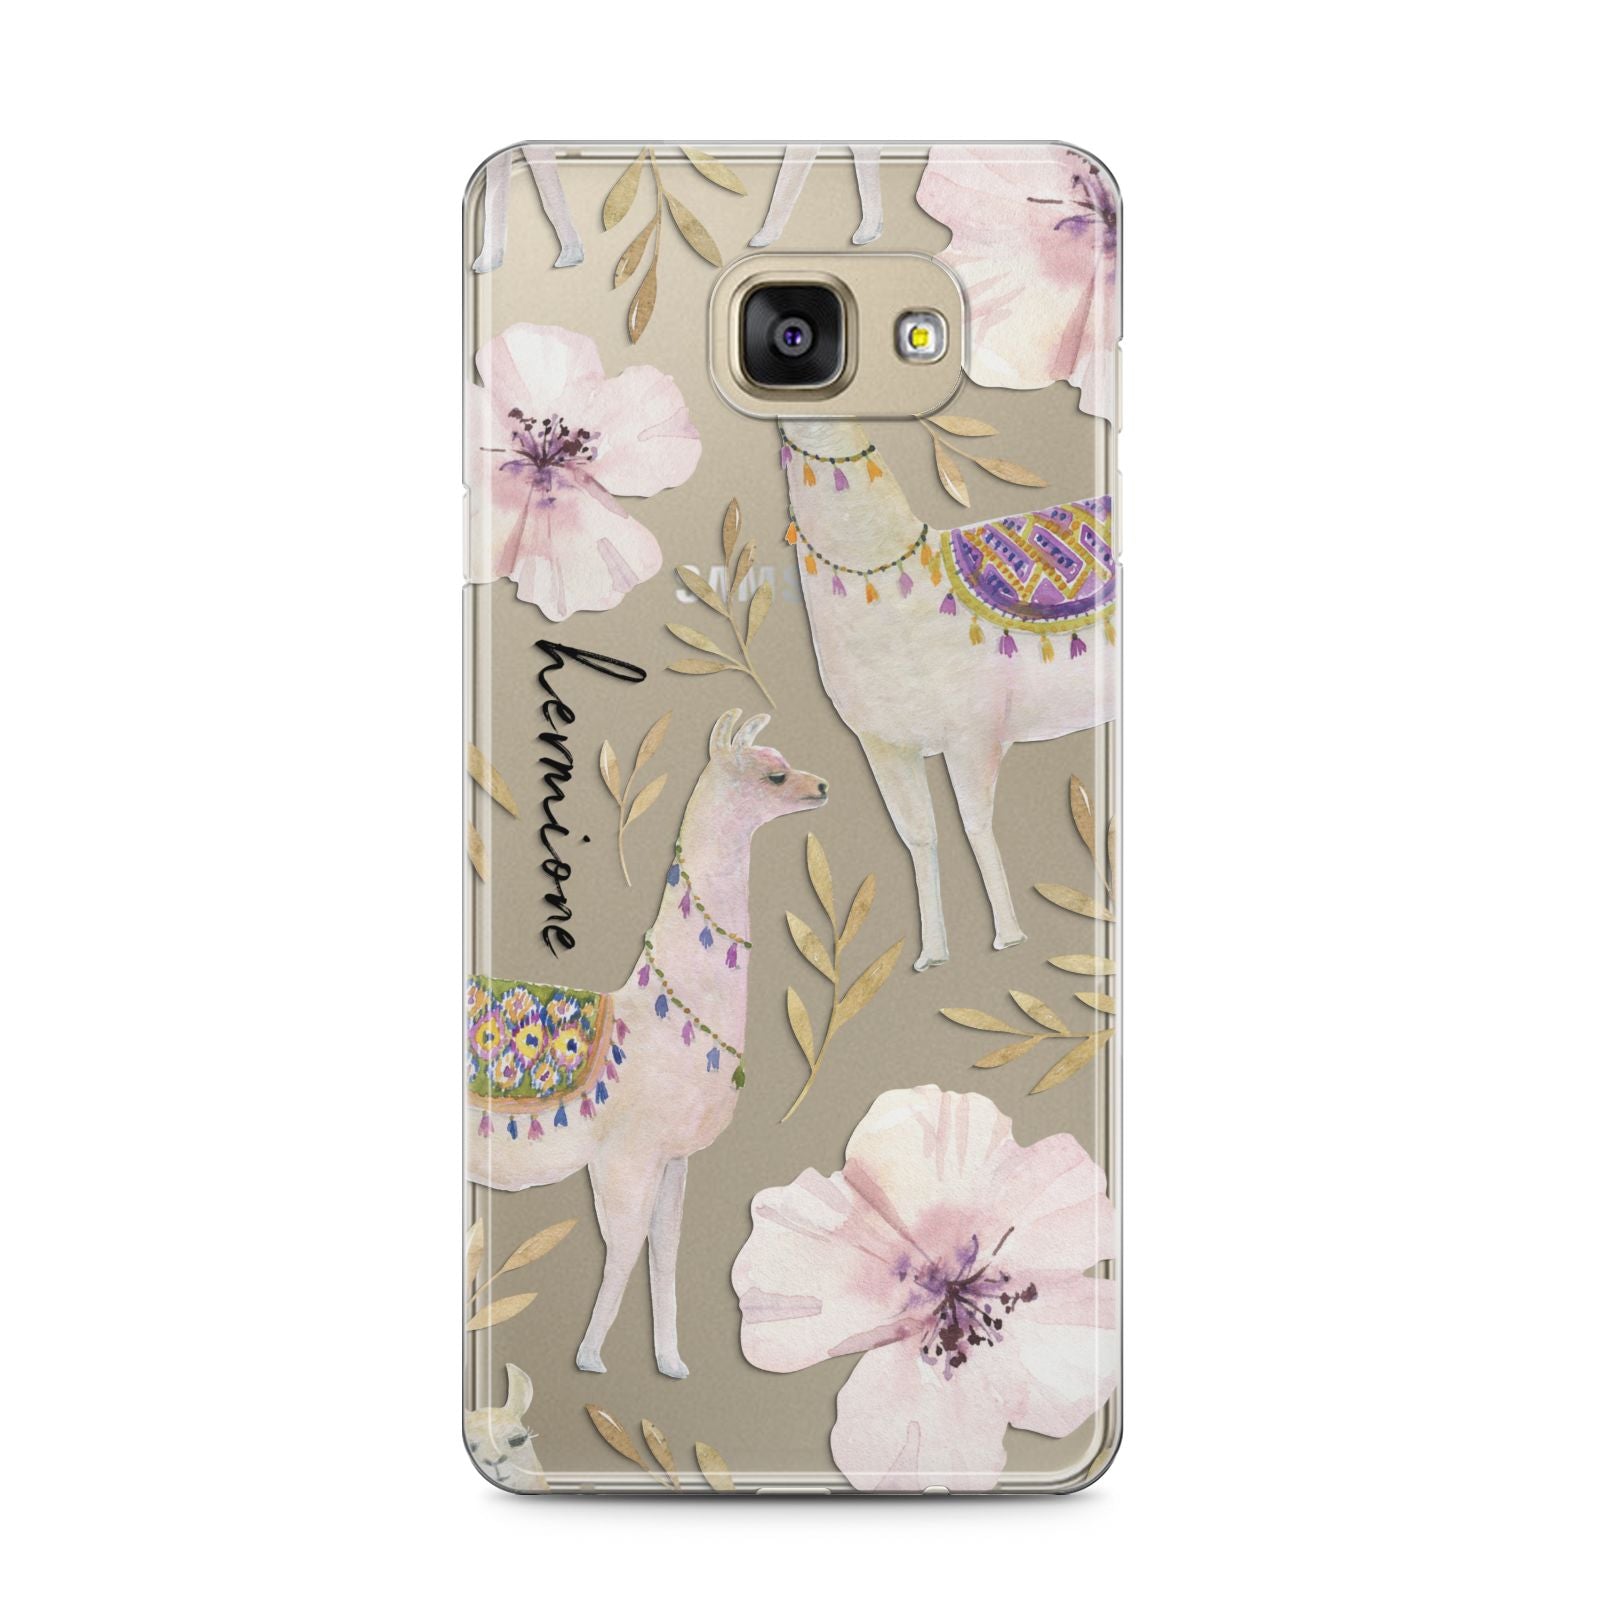 Personalised Llamas Samsung Galaxy A5 2016 Case on gold phone